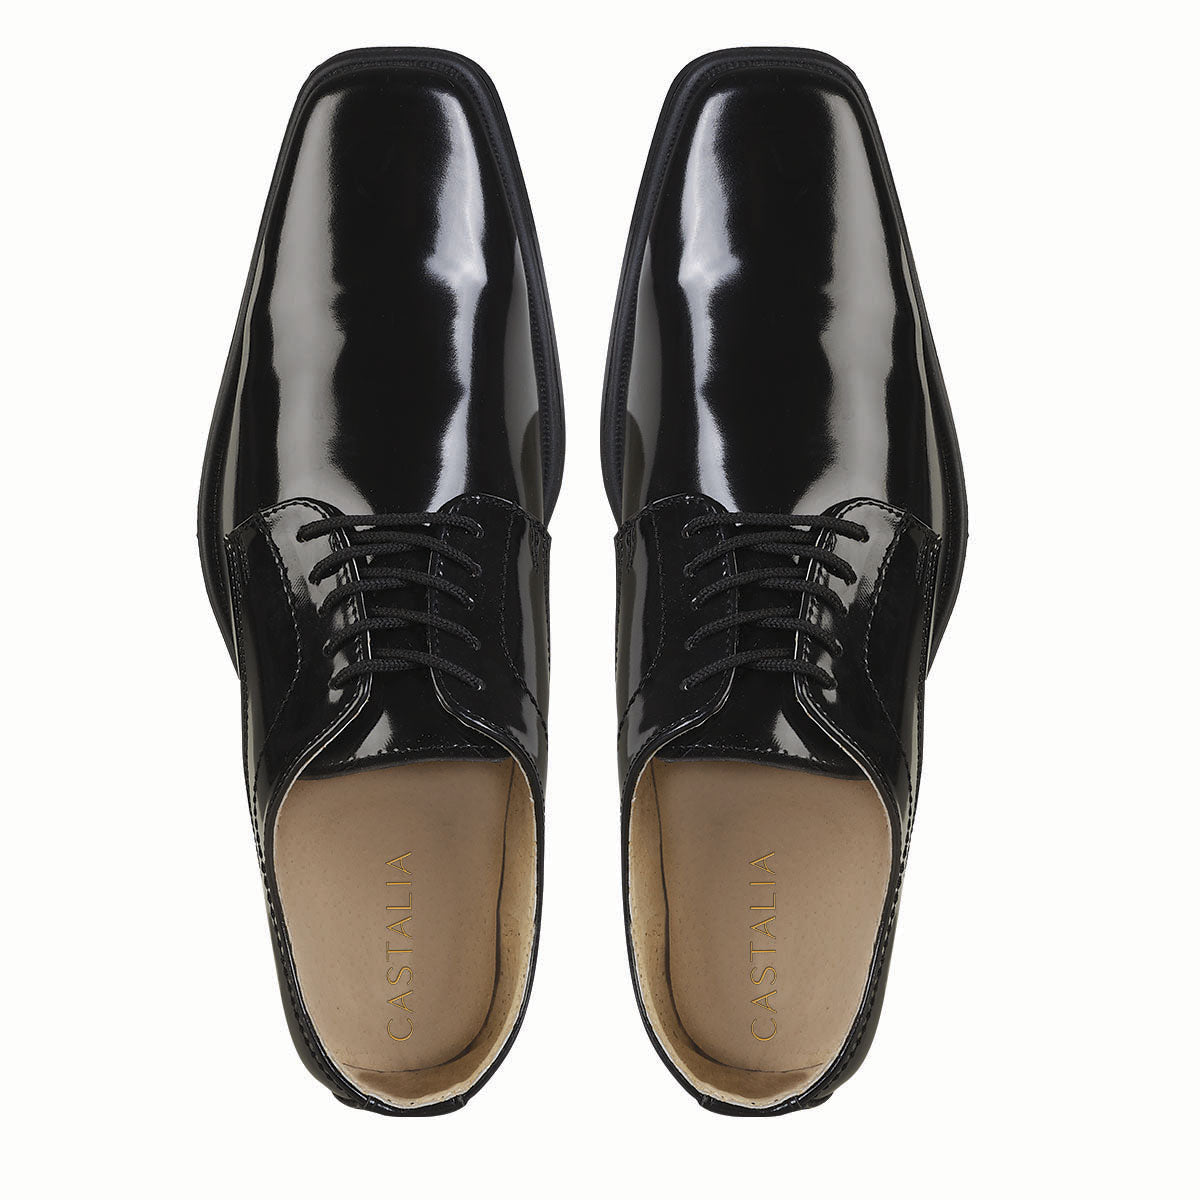 Zapato Formal Para Hombre CASTALIA 455-47 Negro